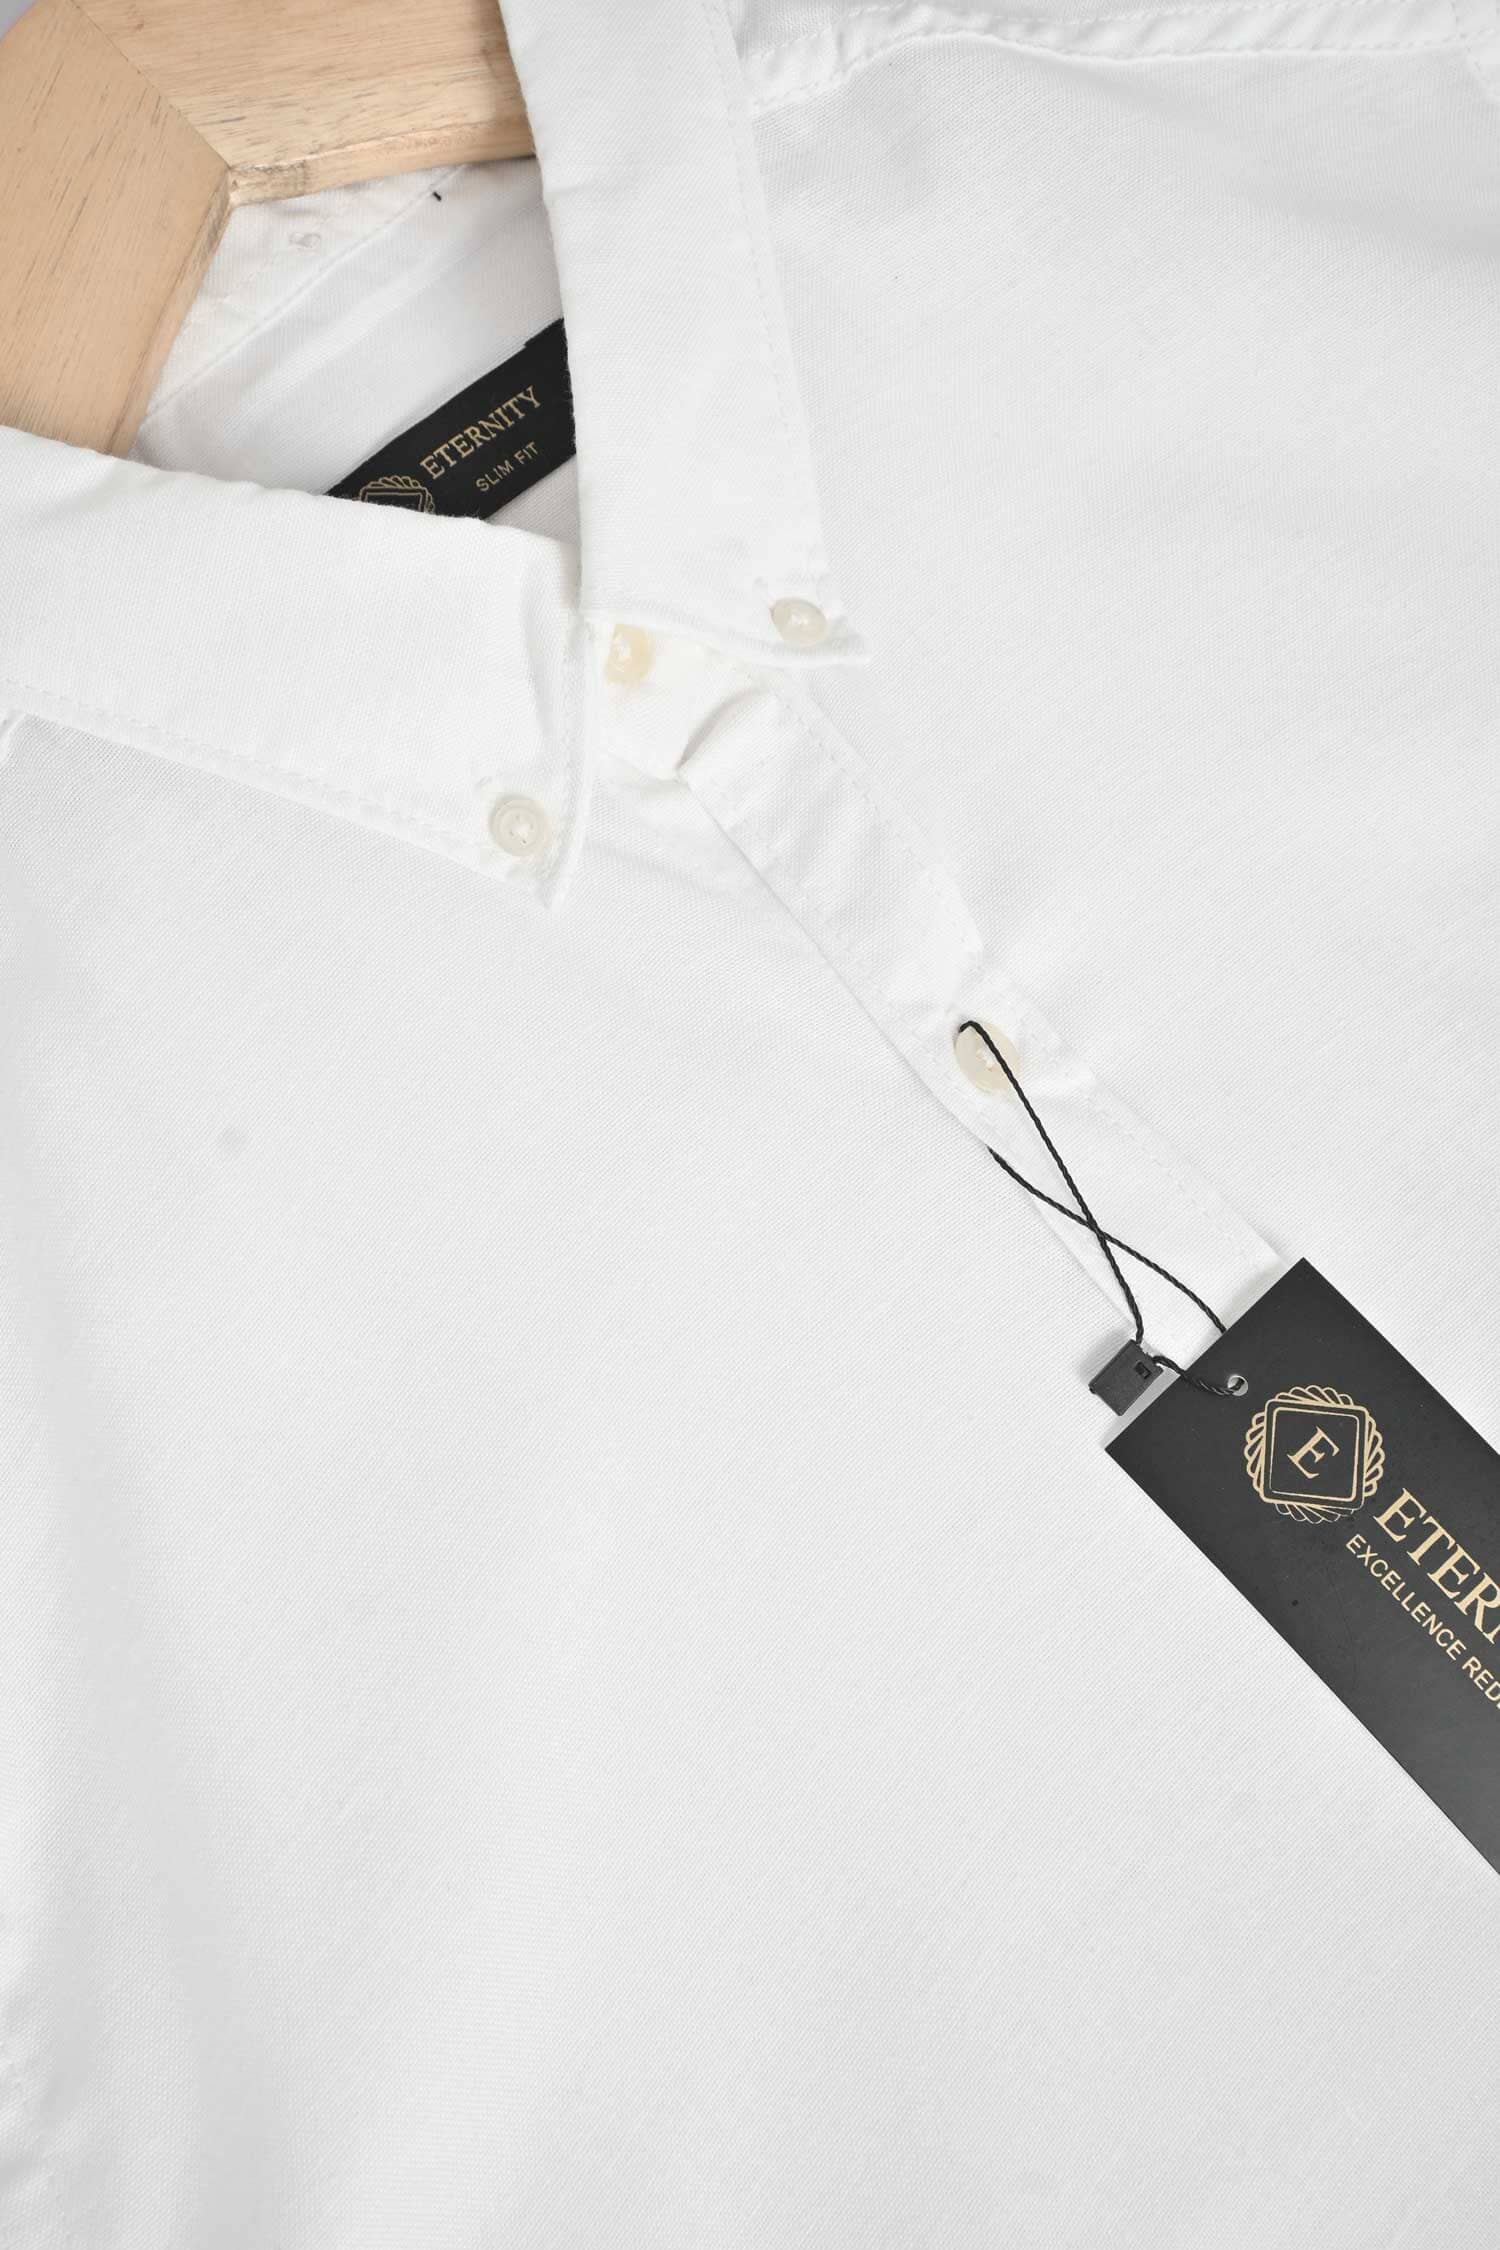 Eternity Men's Solid Design Vantaa Classic Casual Shirt Men's Casual Shirt ETY 